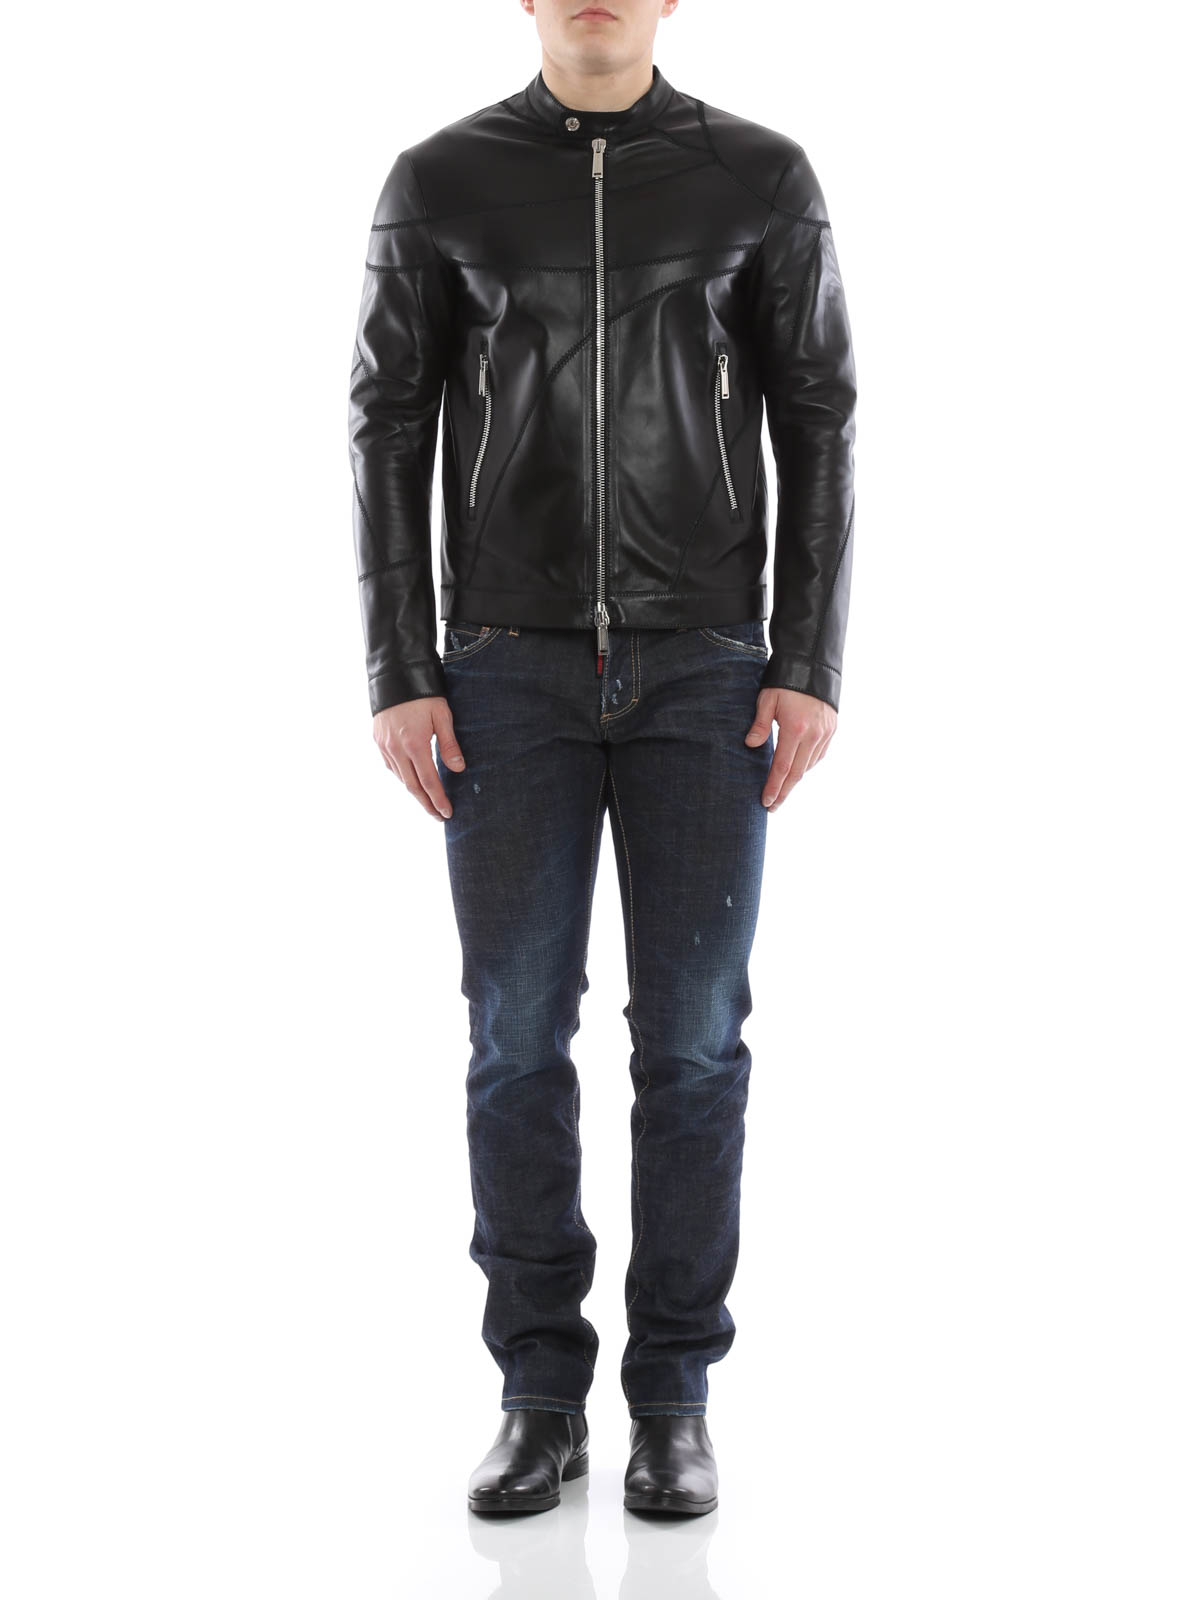 #dsquared #leather jacket